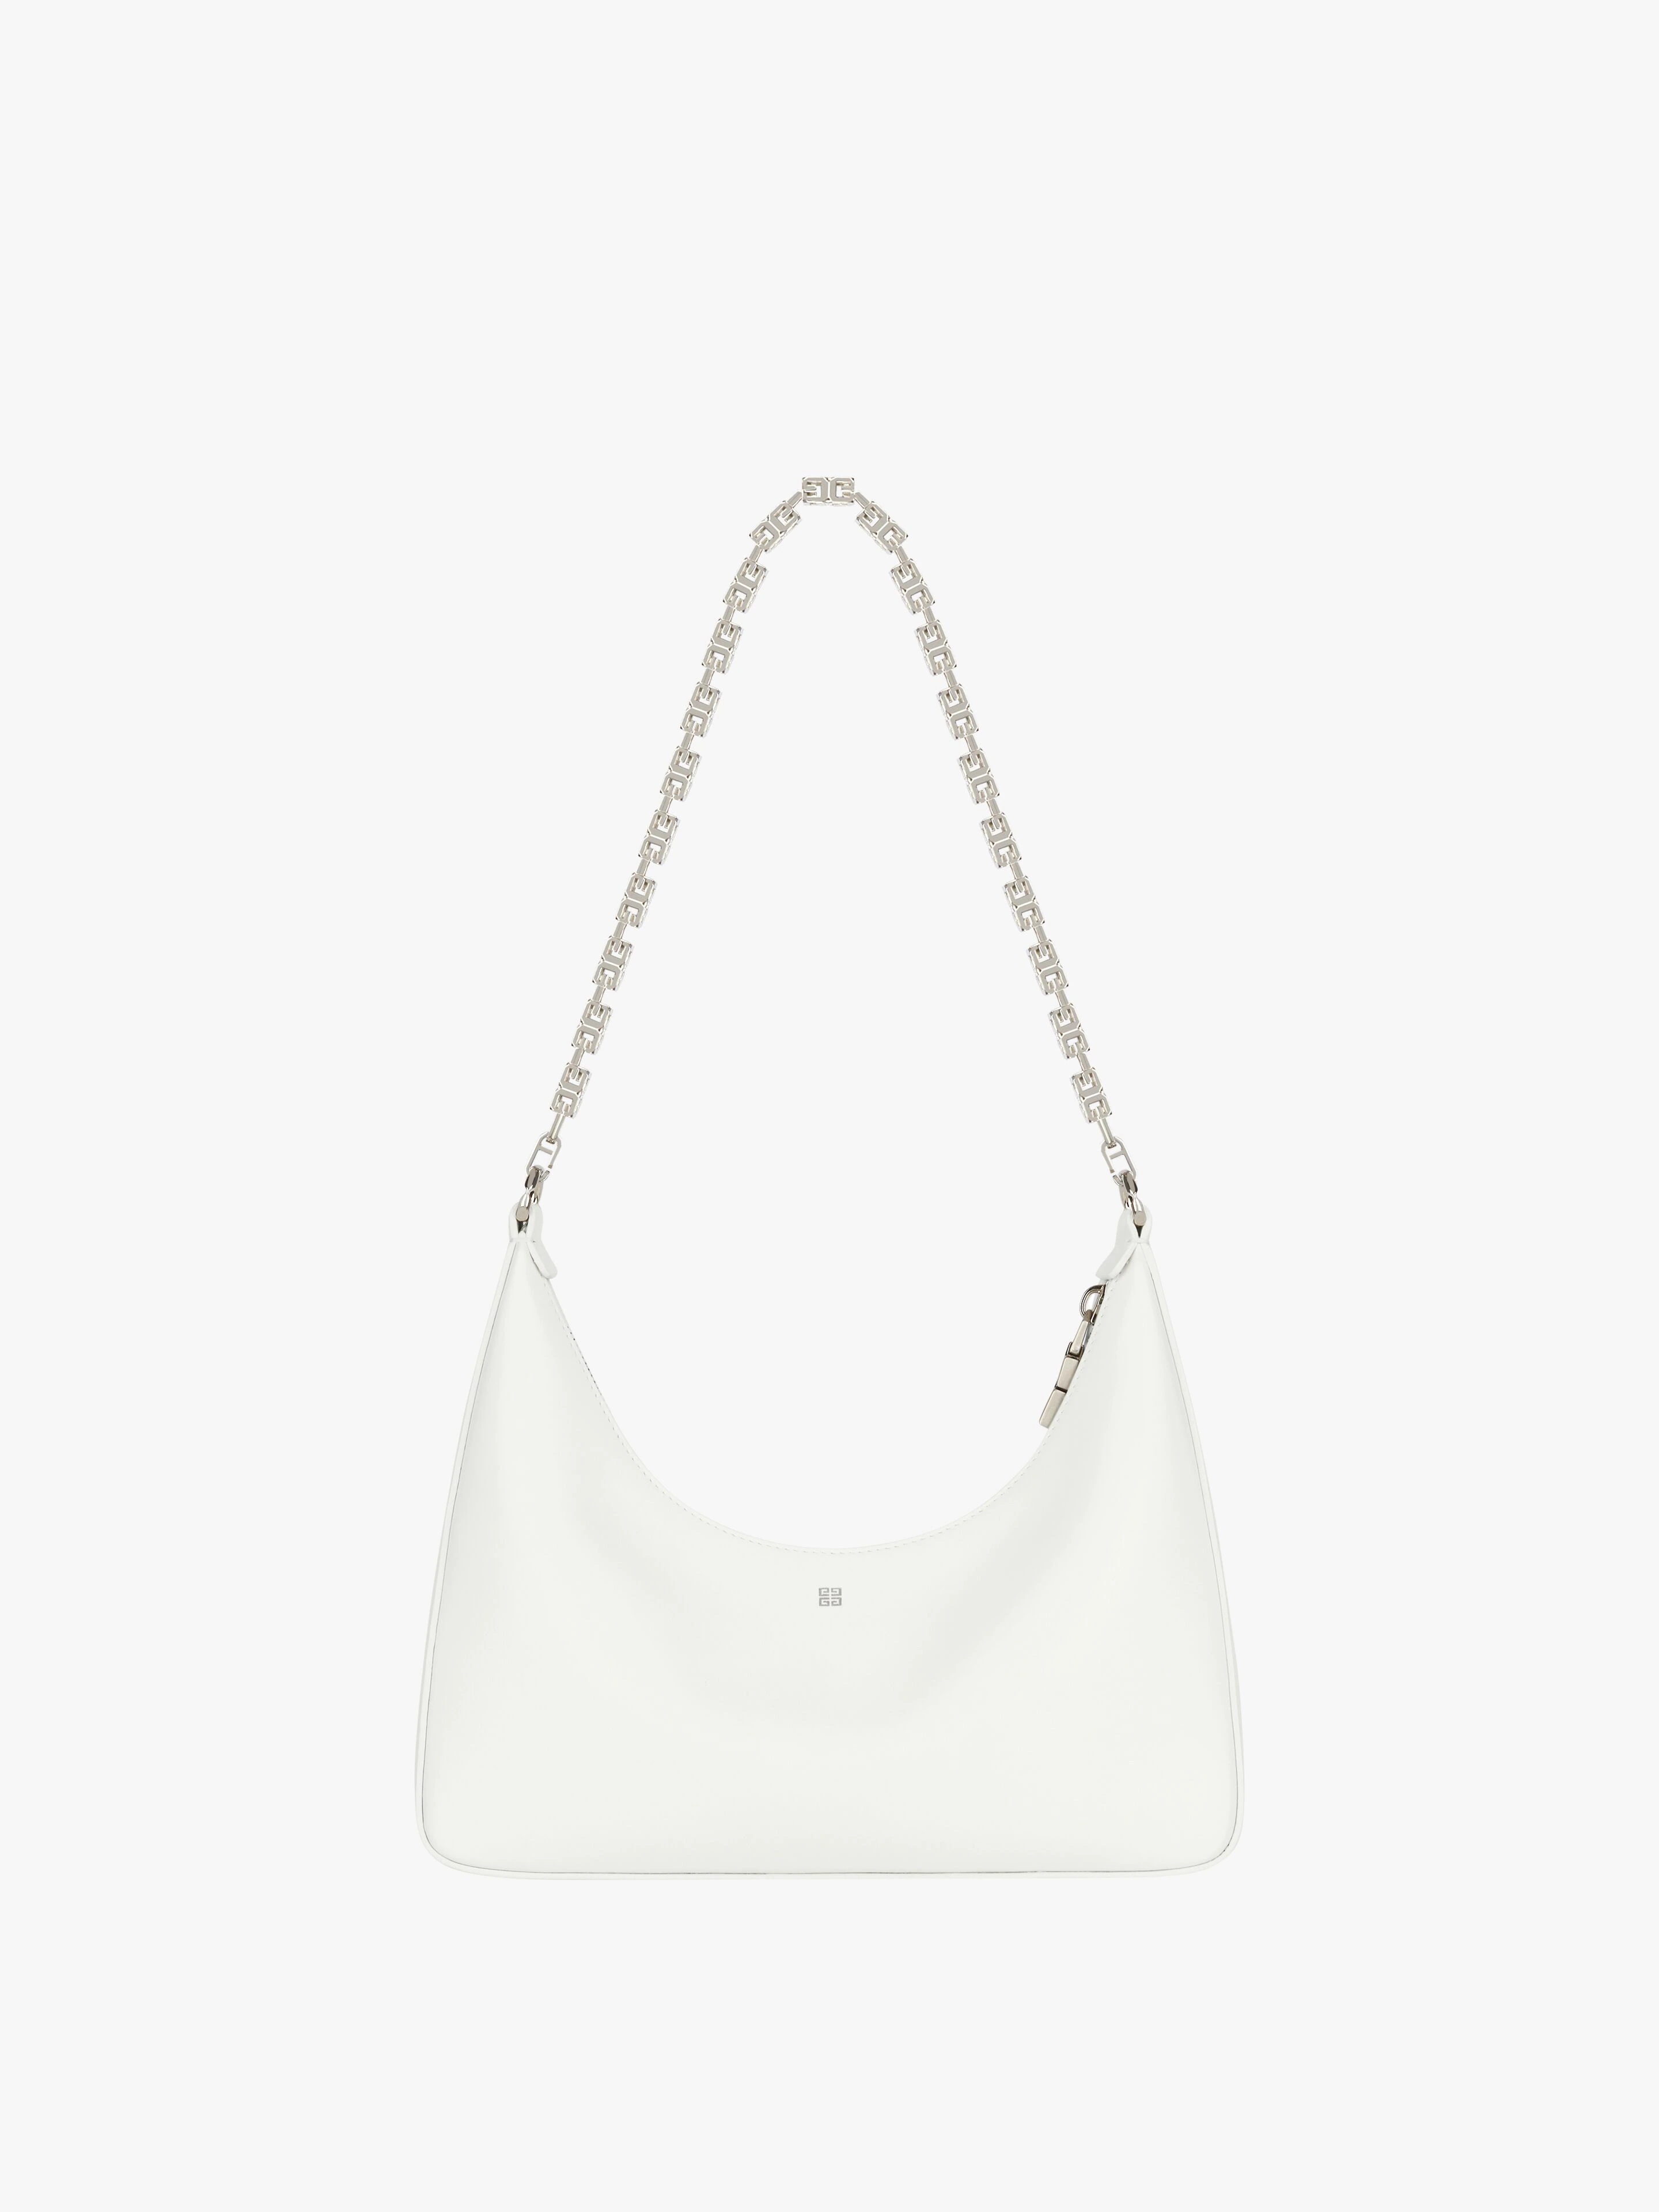 Givenchy Moon Cut-Out Calfskin Small Hobo Bag